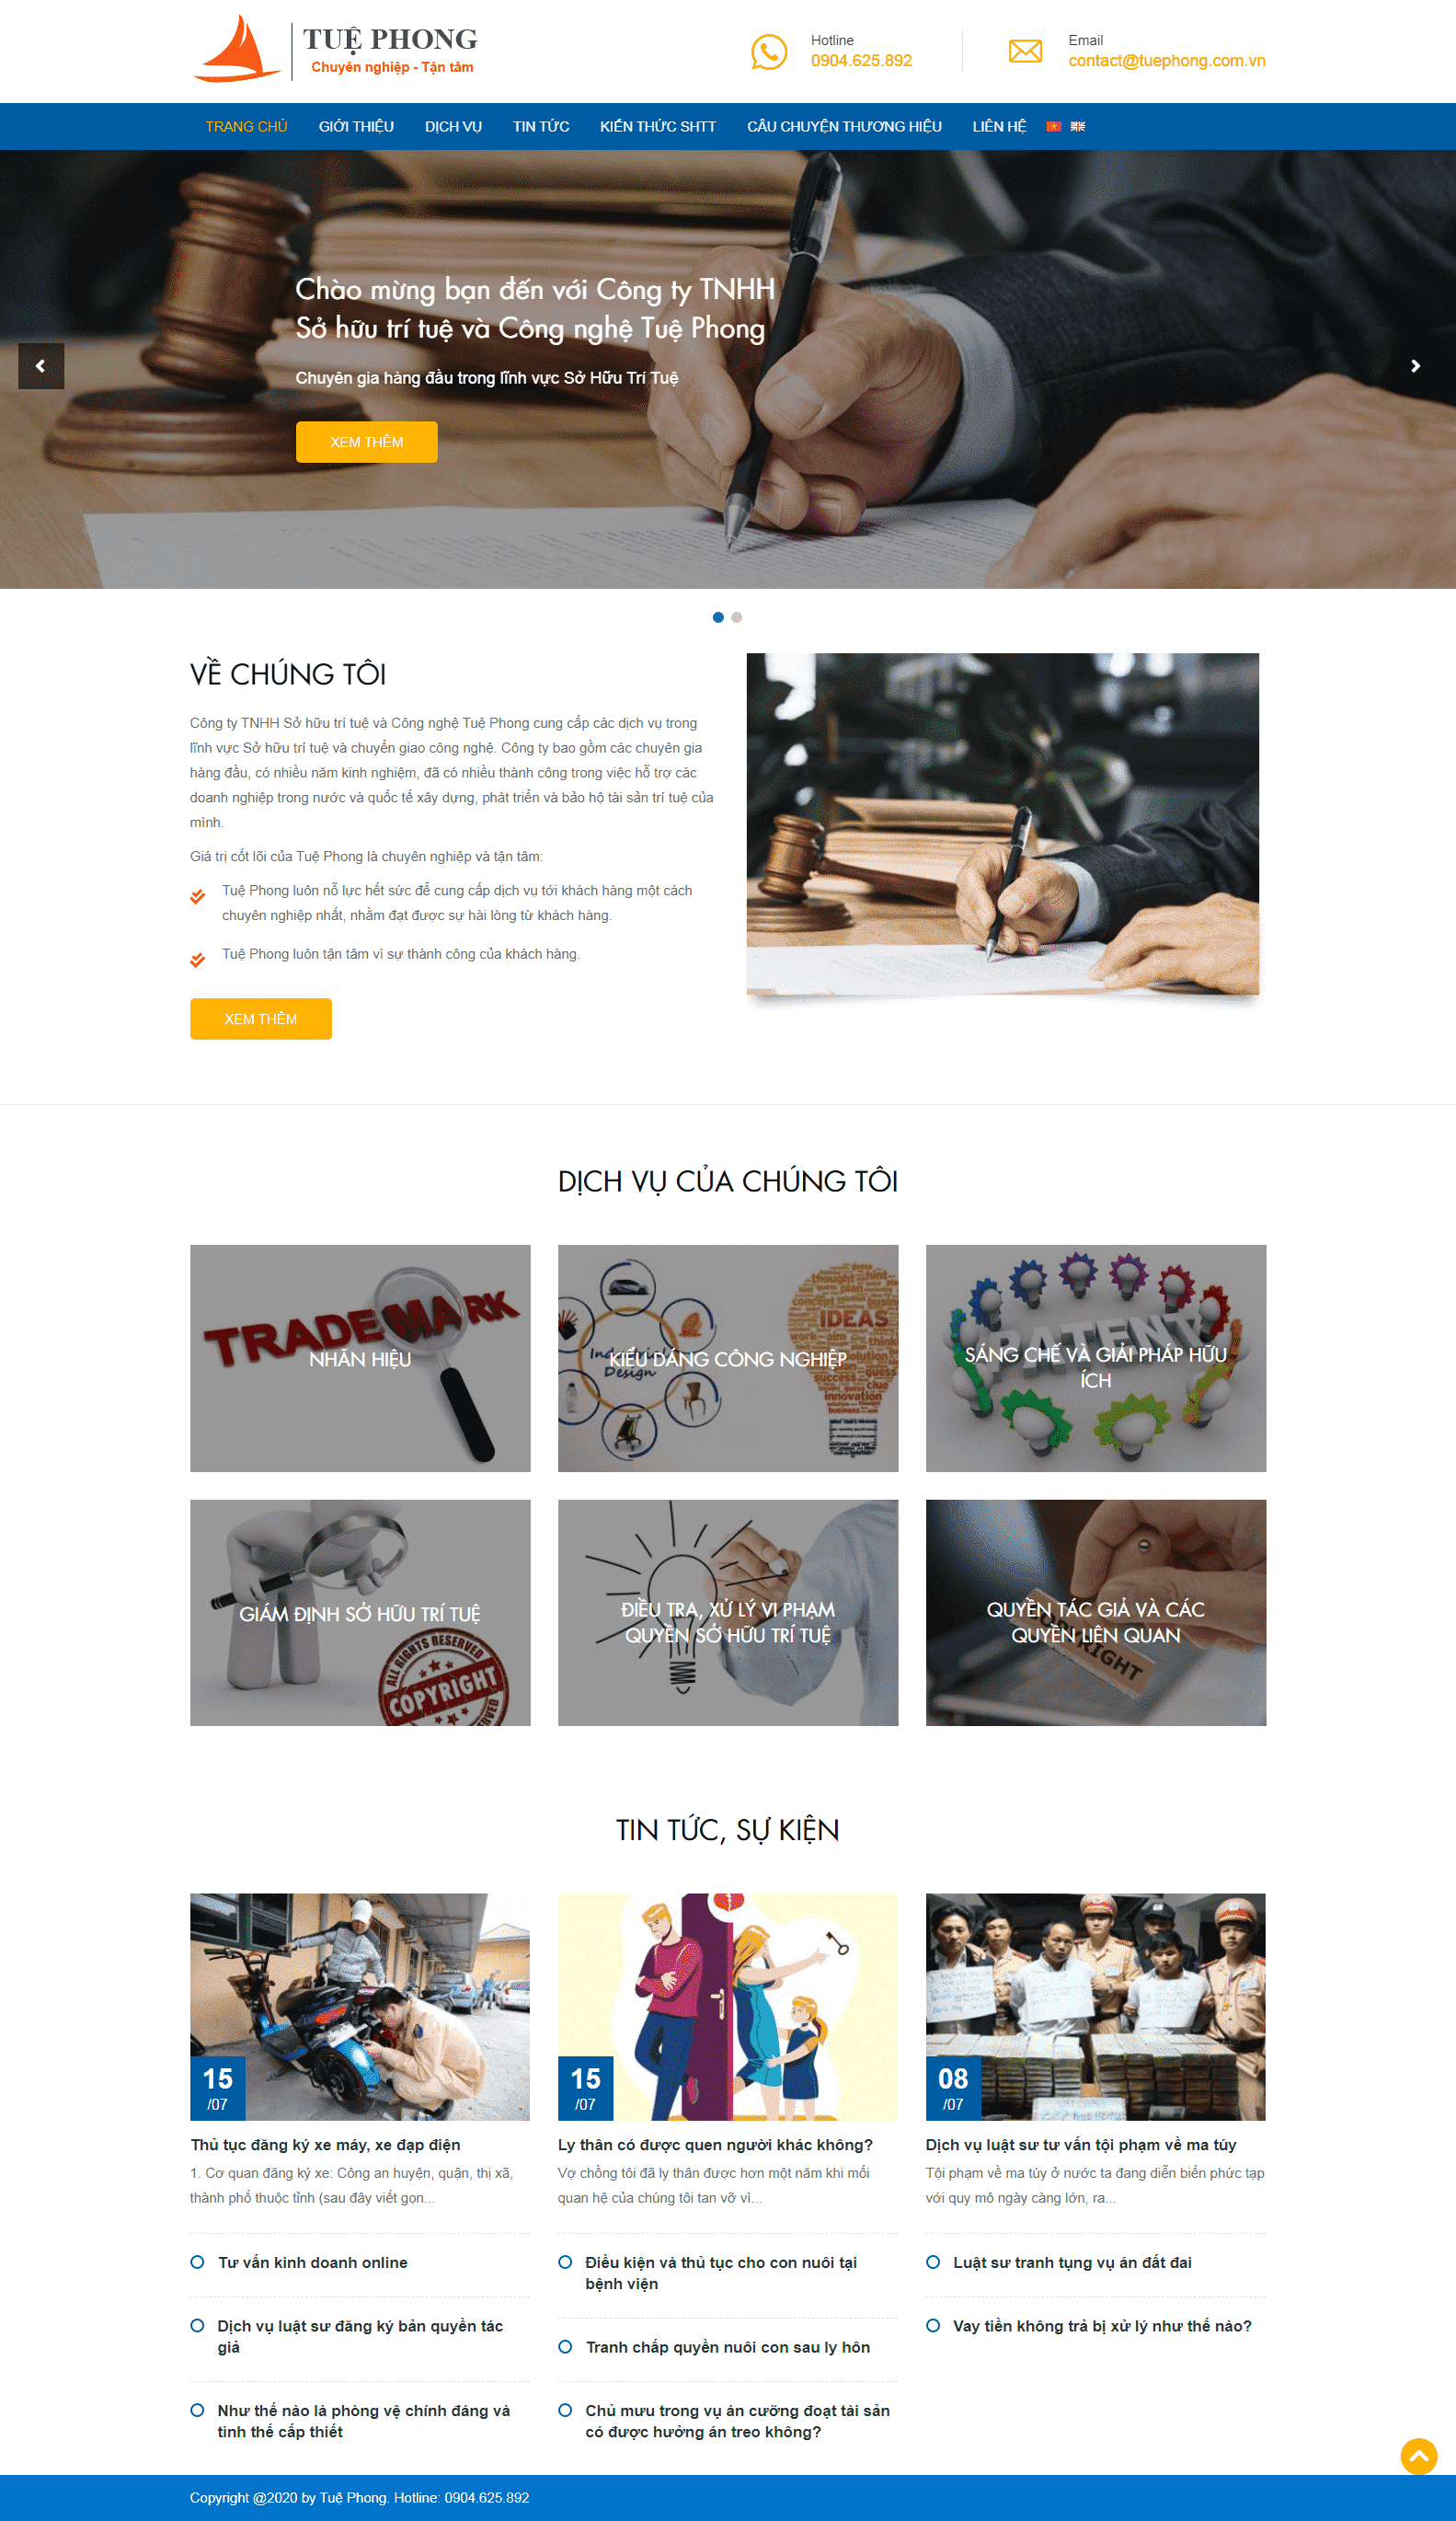 best ecommerce website design templates